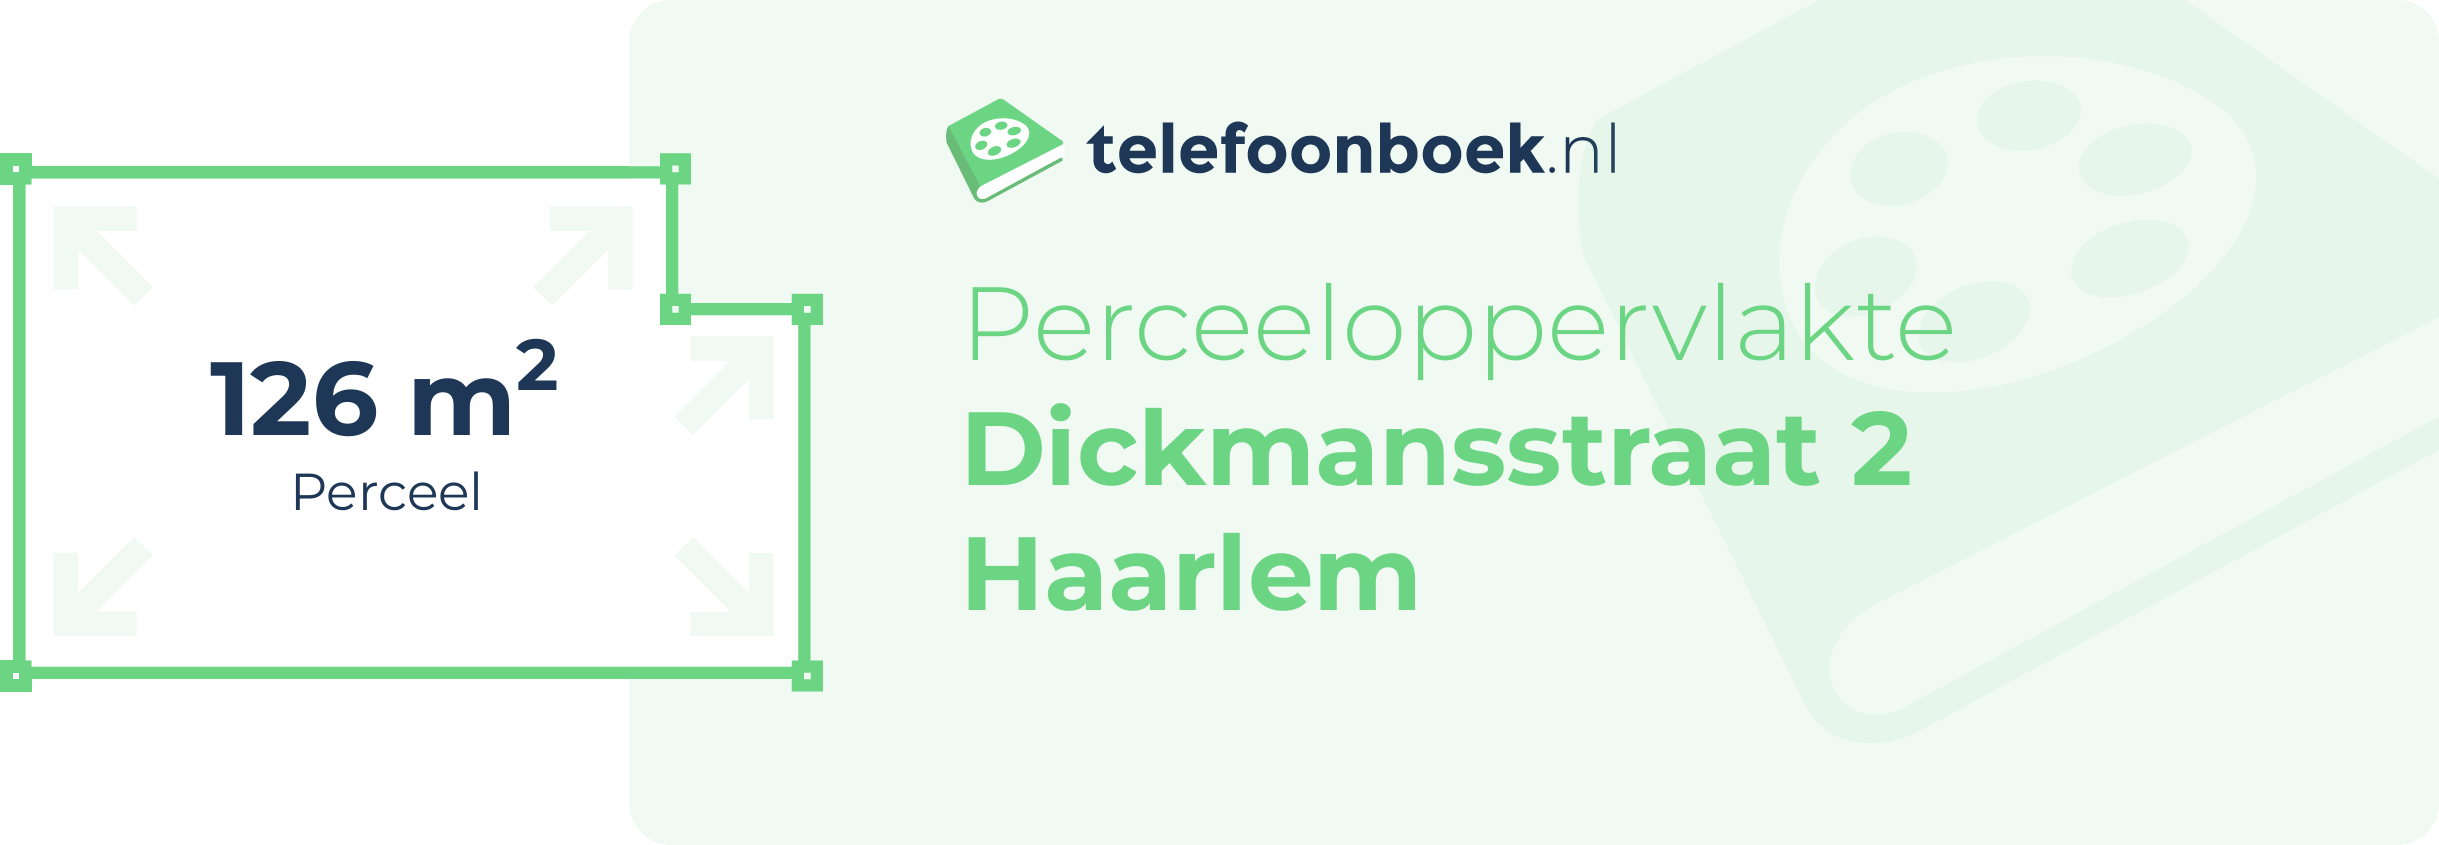 Perceeloppervlakte Dickmansstraat 2 Haarlem